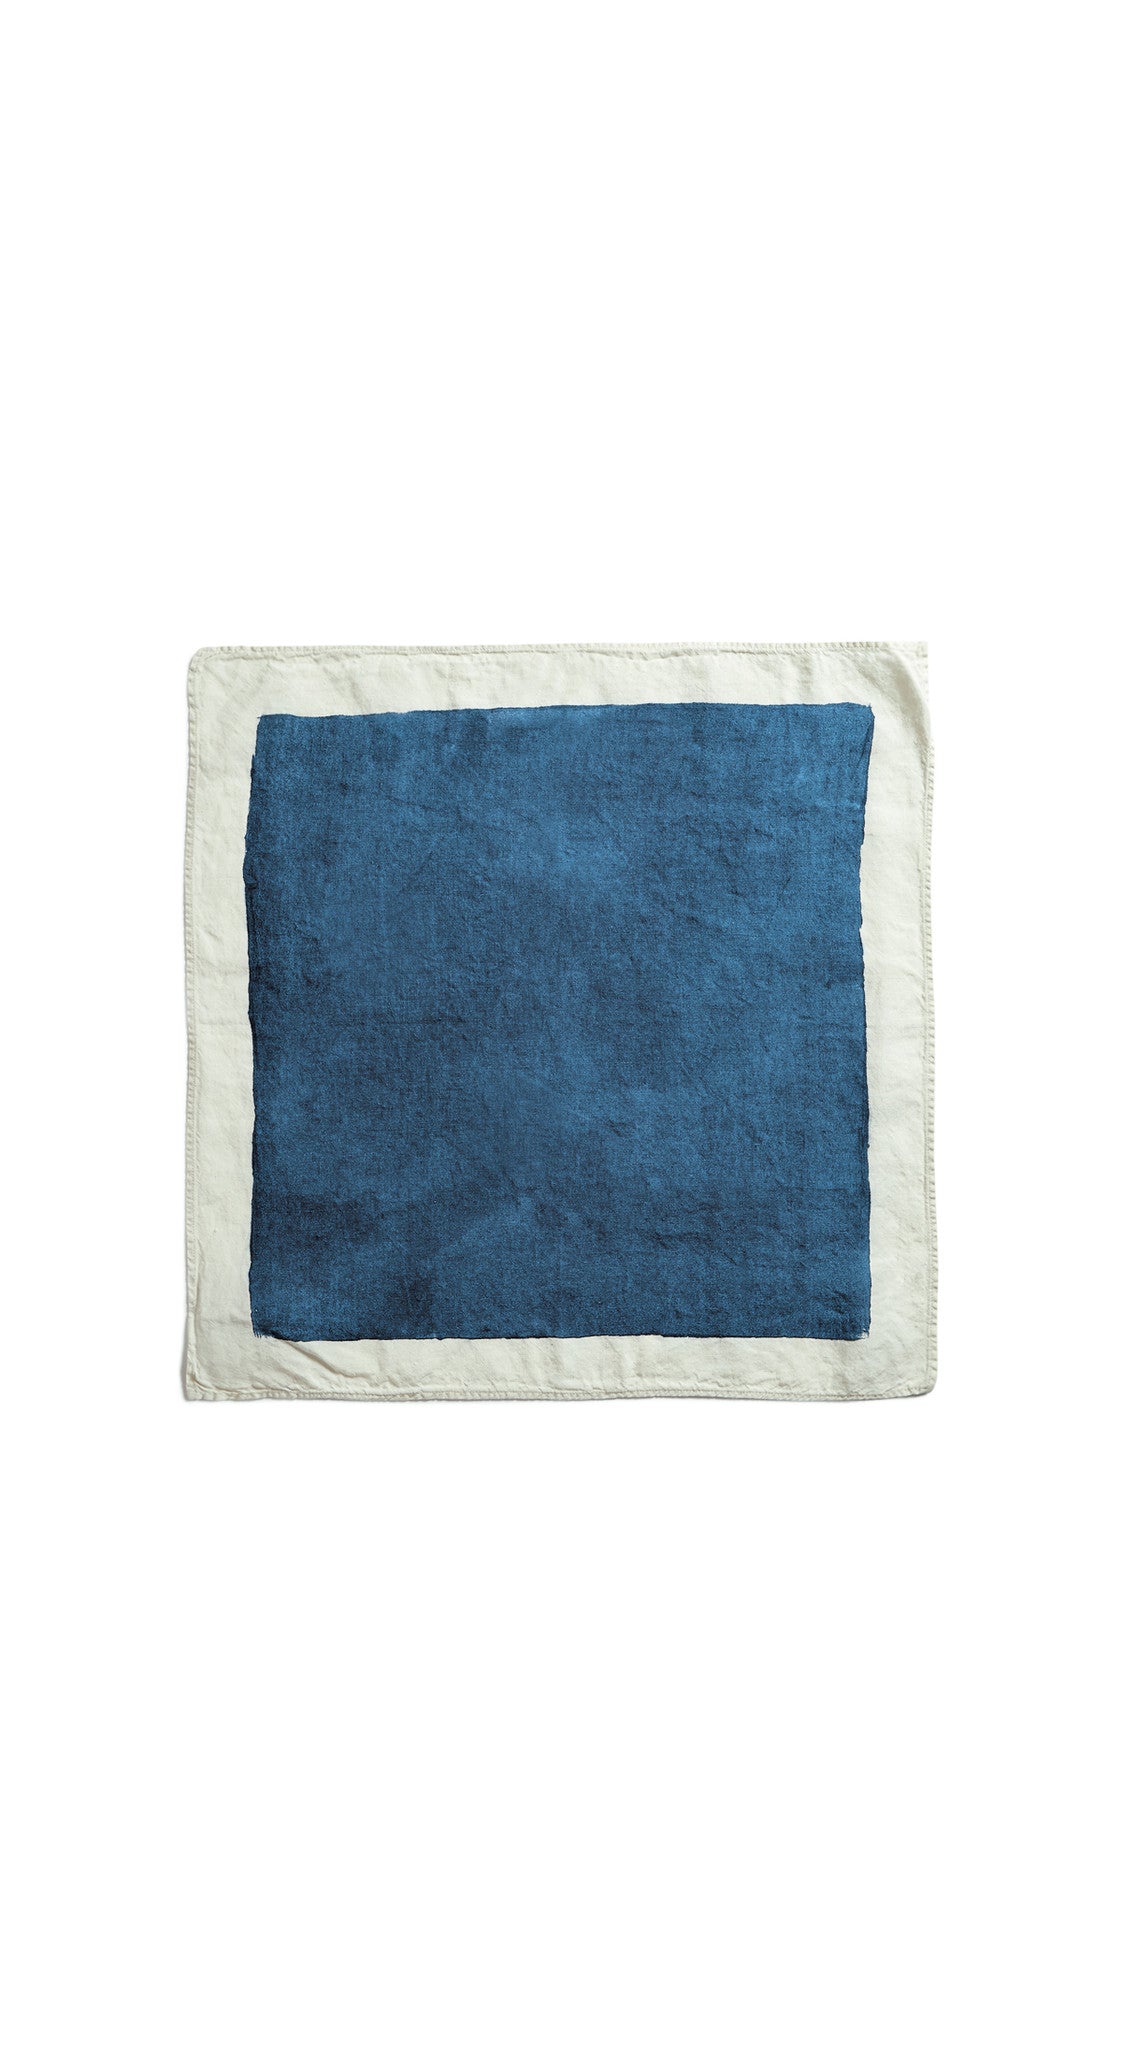 Full Field Linen Napkin in Midnight Blue, 50x50cm